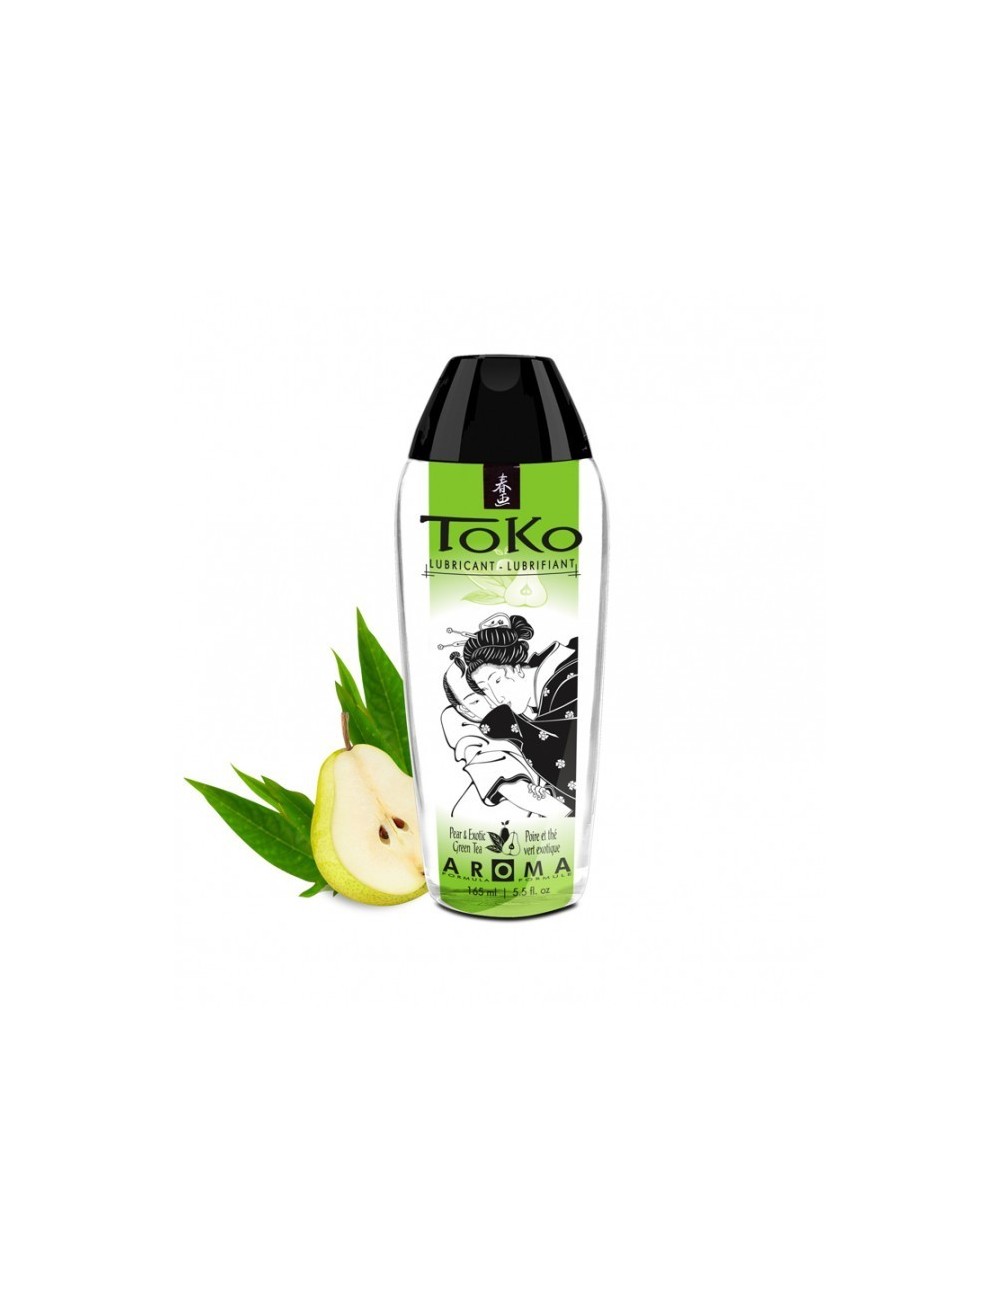 Lubrifiant toko aroma poire et thé vert exotique 165ml - Lubrifiants - Shunga